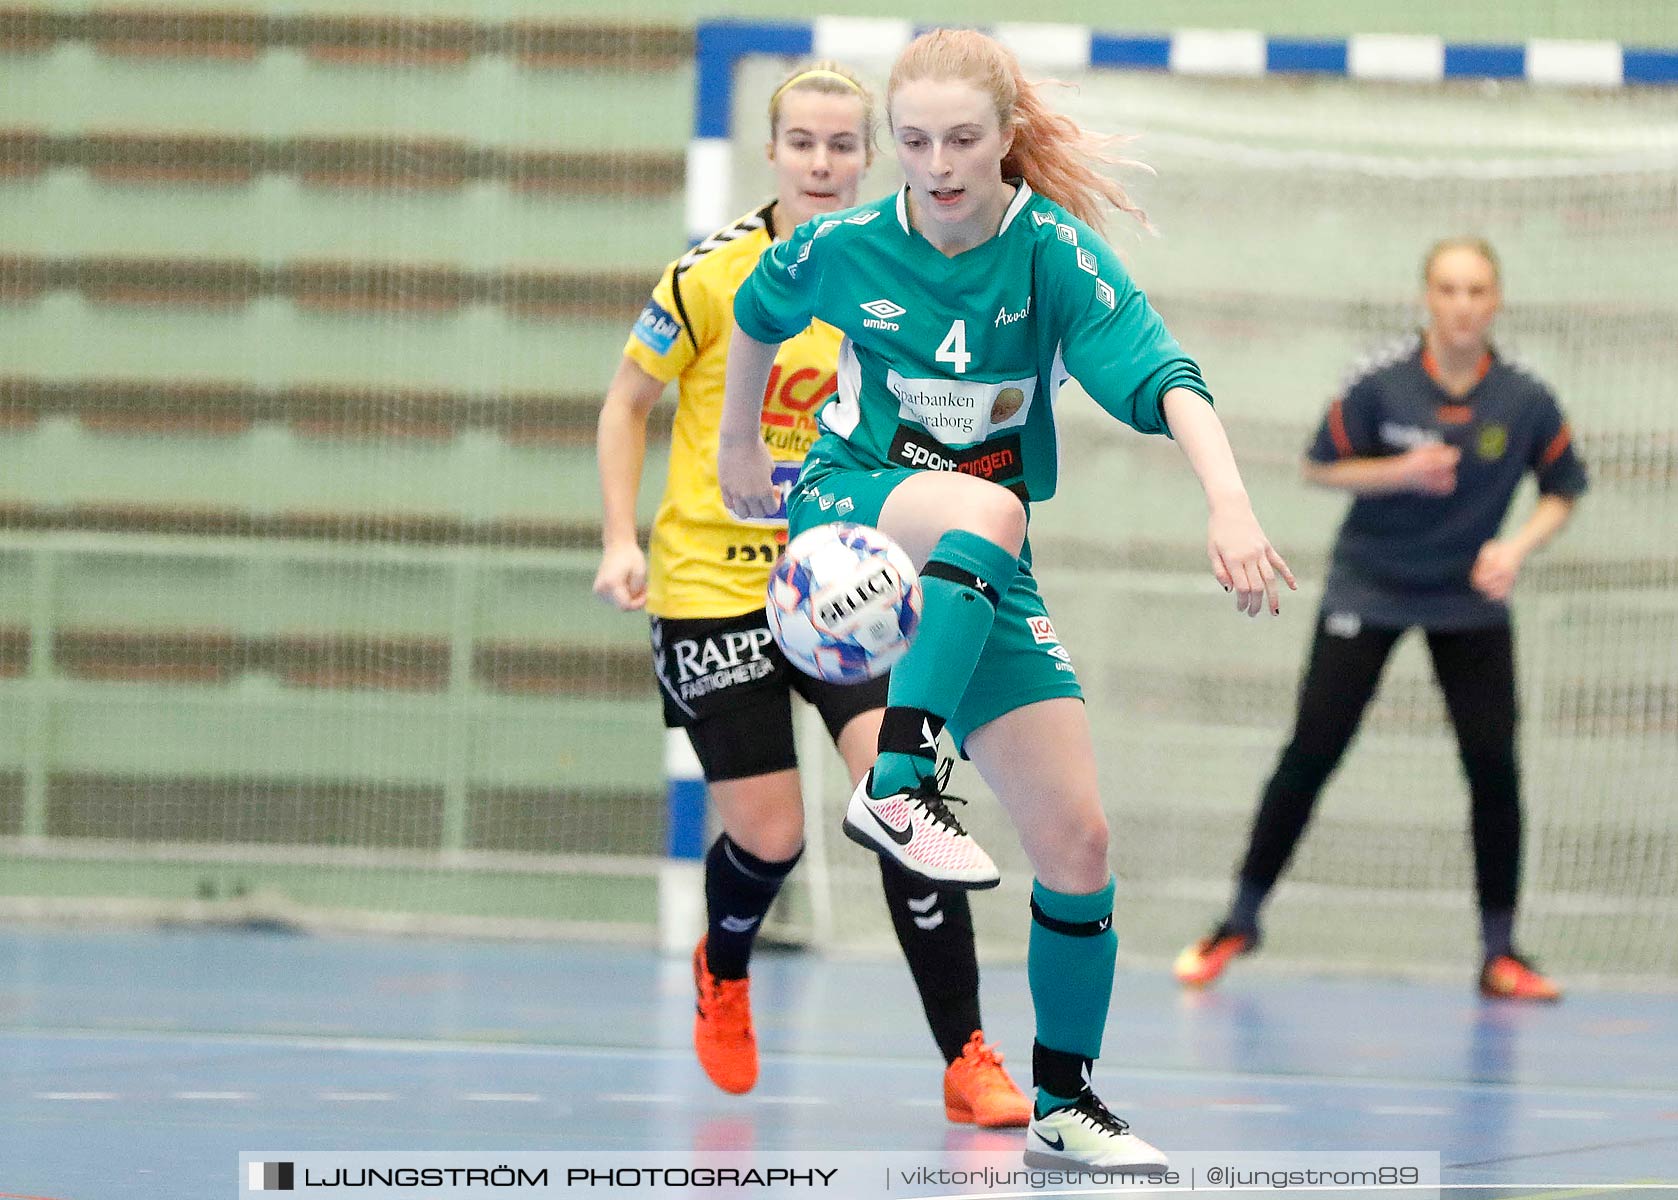 Skövde Futsalcup 2019 Damer Skultorps IF-Axvalls IF,dam,Arena Skövde,Skövde,Sverige,Futsal,,2019,227068